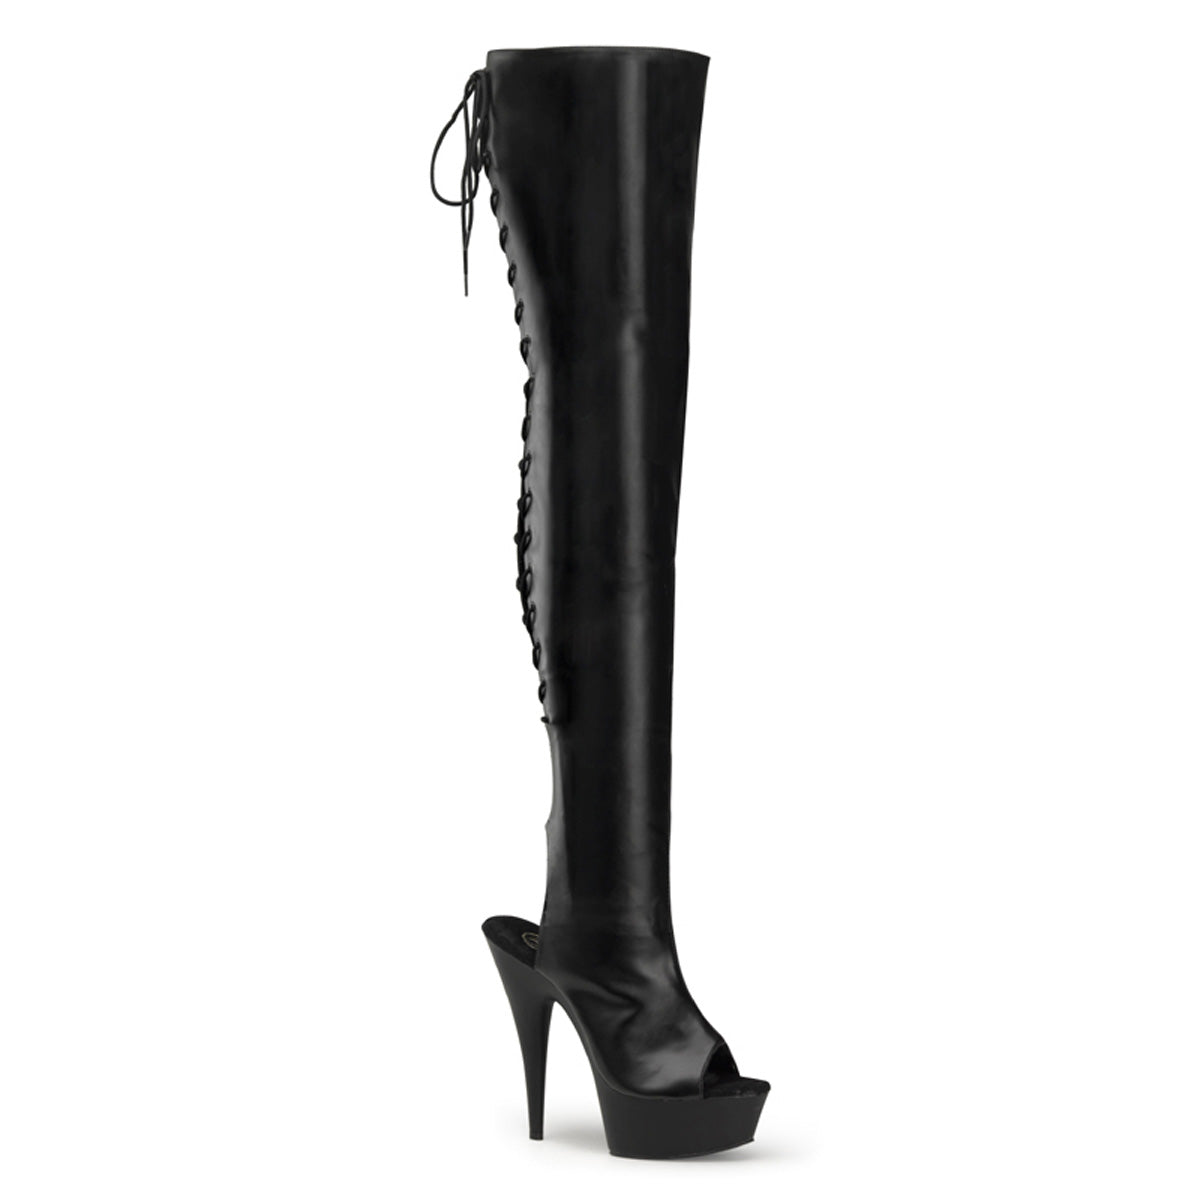 DELIGHT-3017 Pleaser 6 Inch Heel Black Pole Dancer Platforms-Pleaser- Sexy Shoes